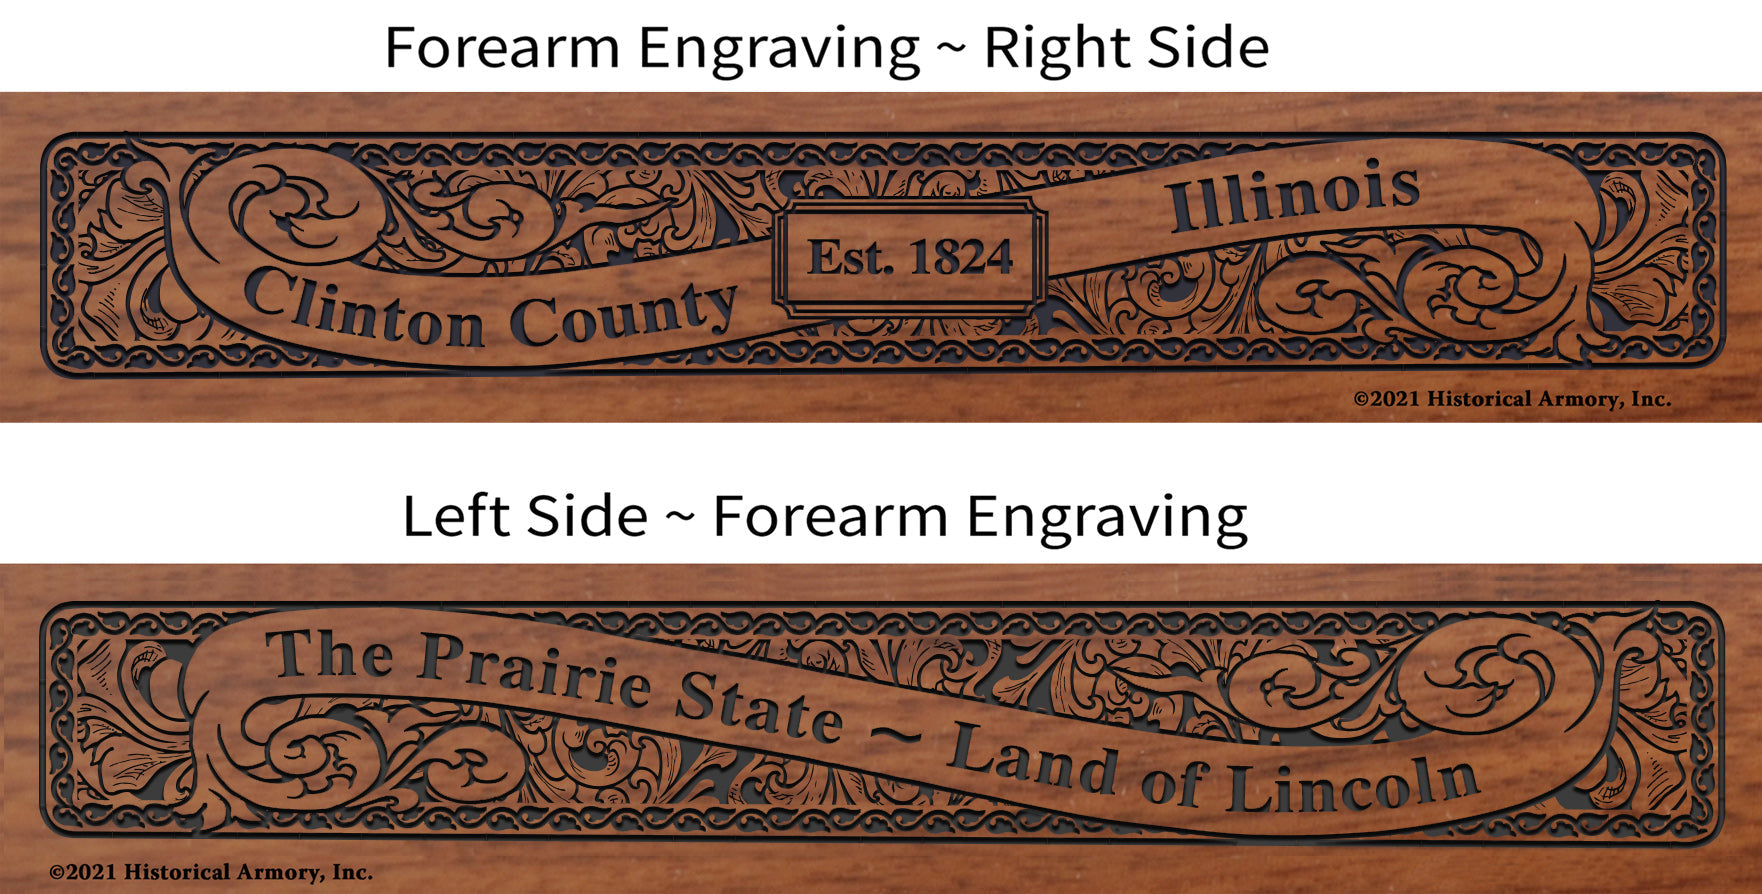 Clinton County Illinois Establishment and Motto History Engraved Rifle Forearm